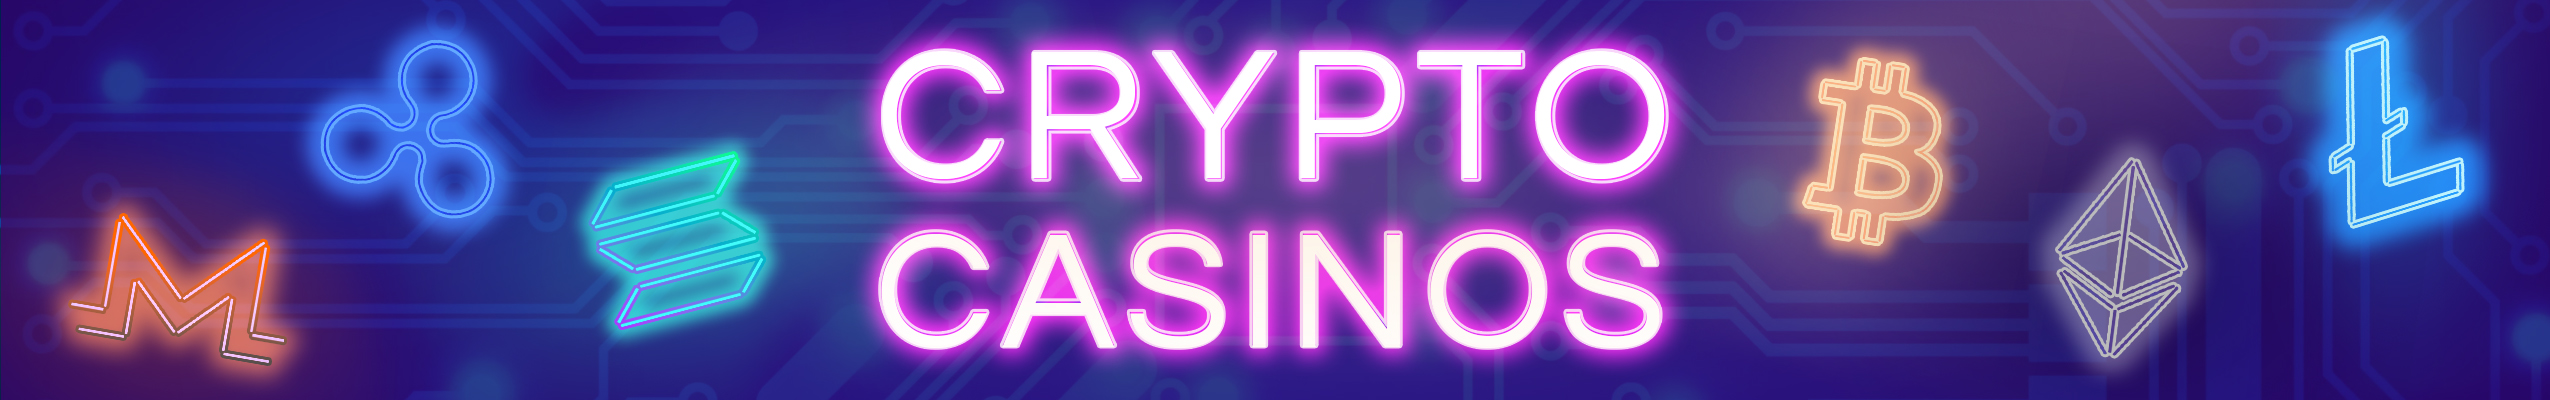 Crypto Casinos Banner